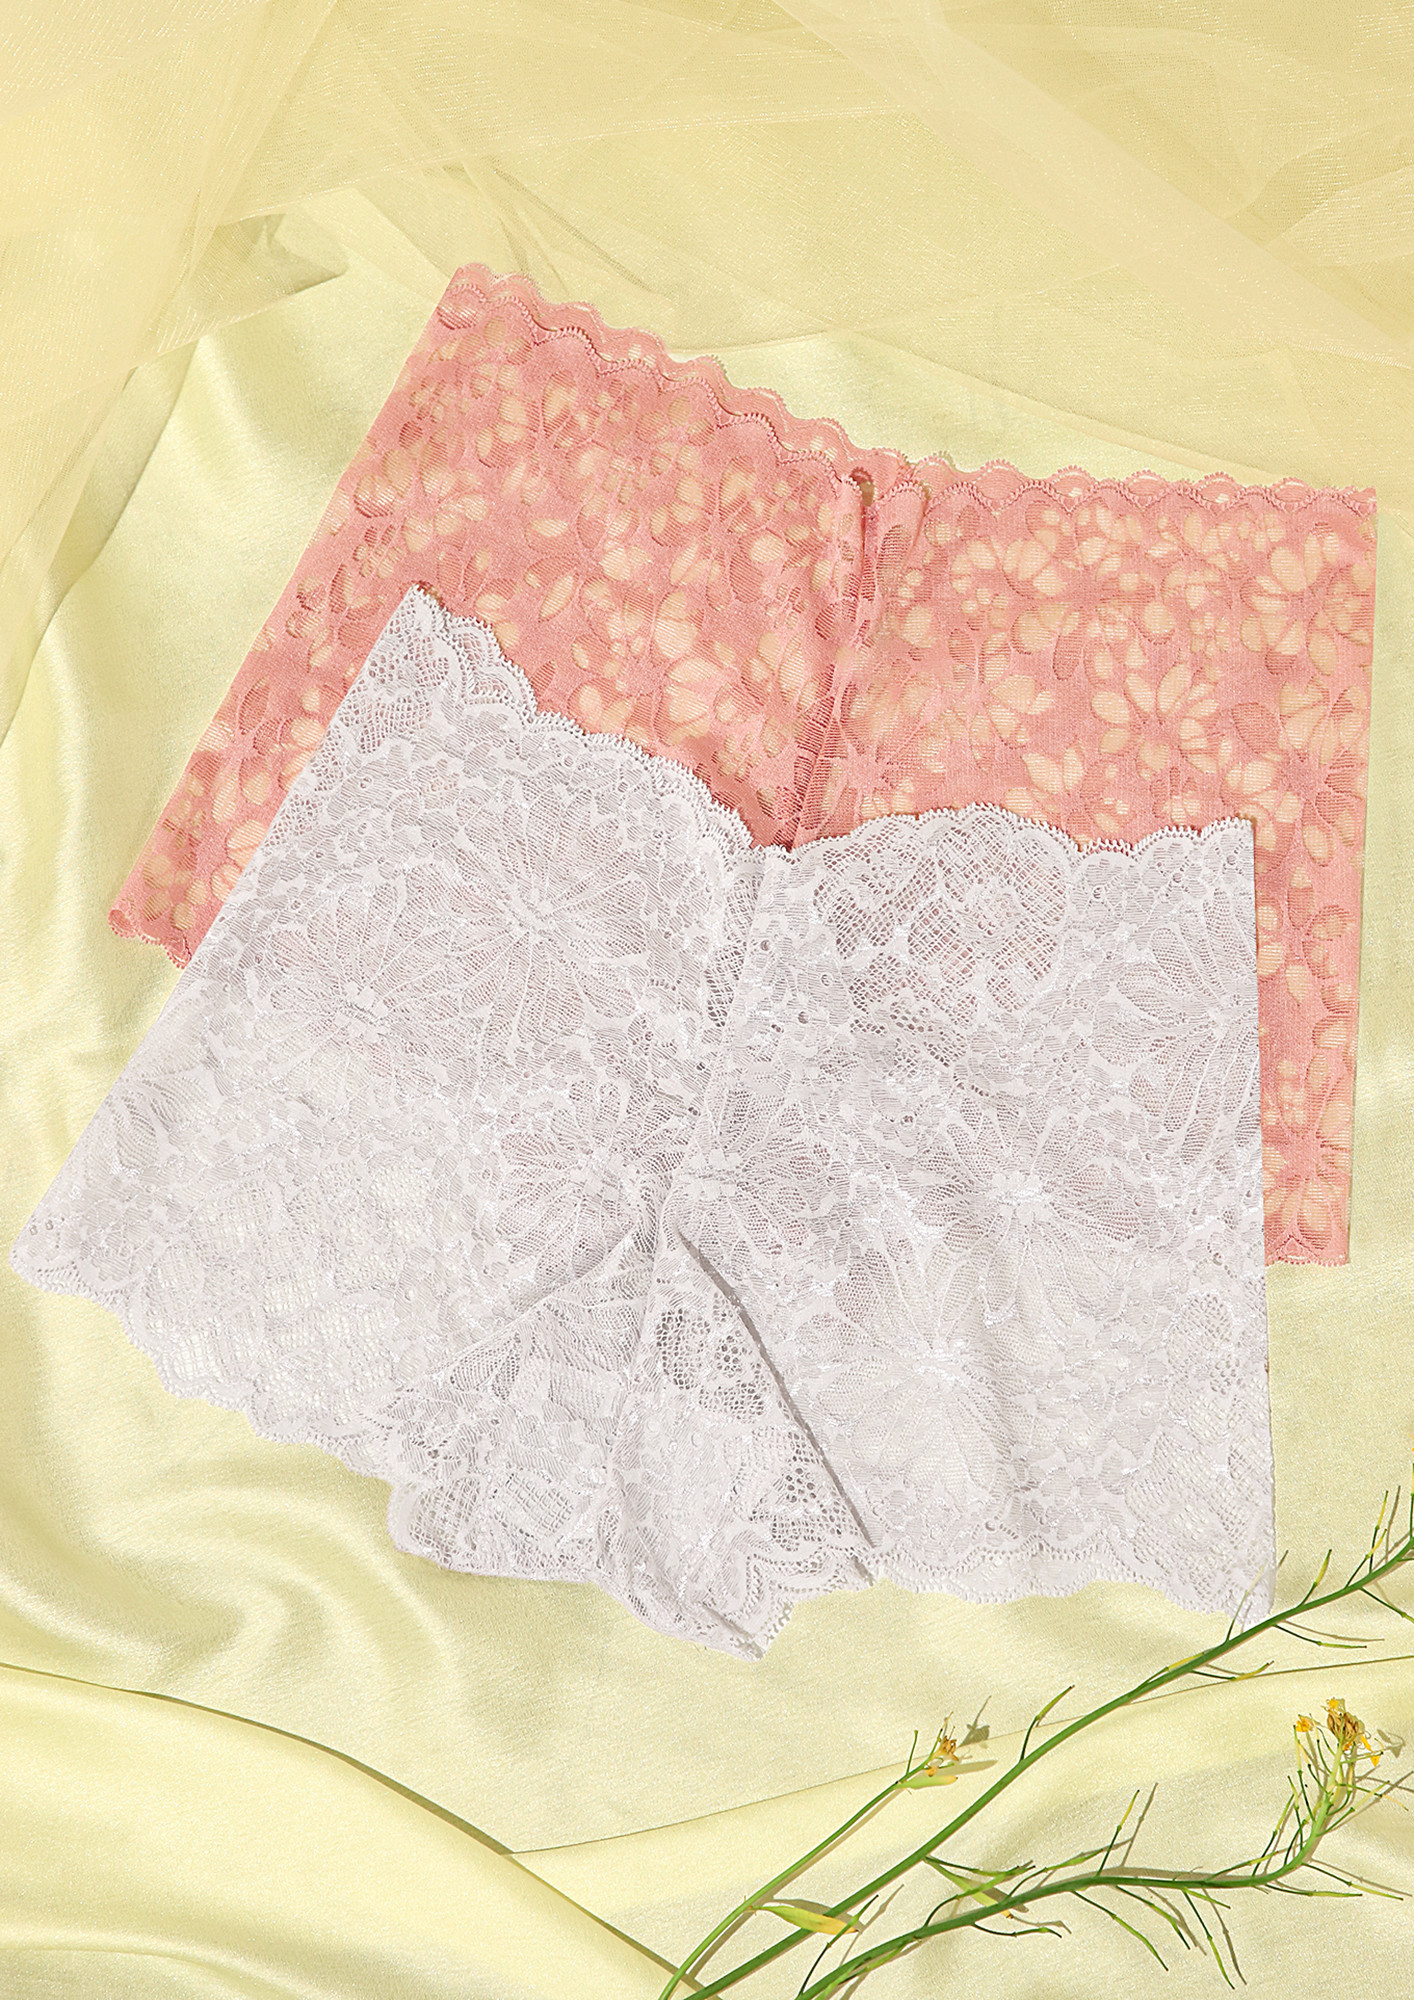 Pink Panties - Buy Pink Panties for Women Online in India